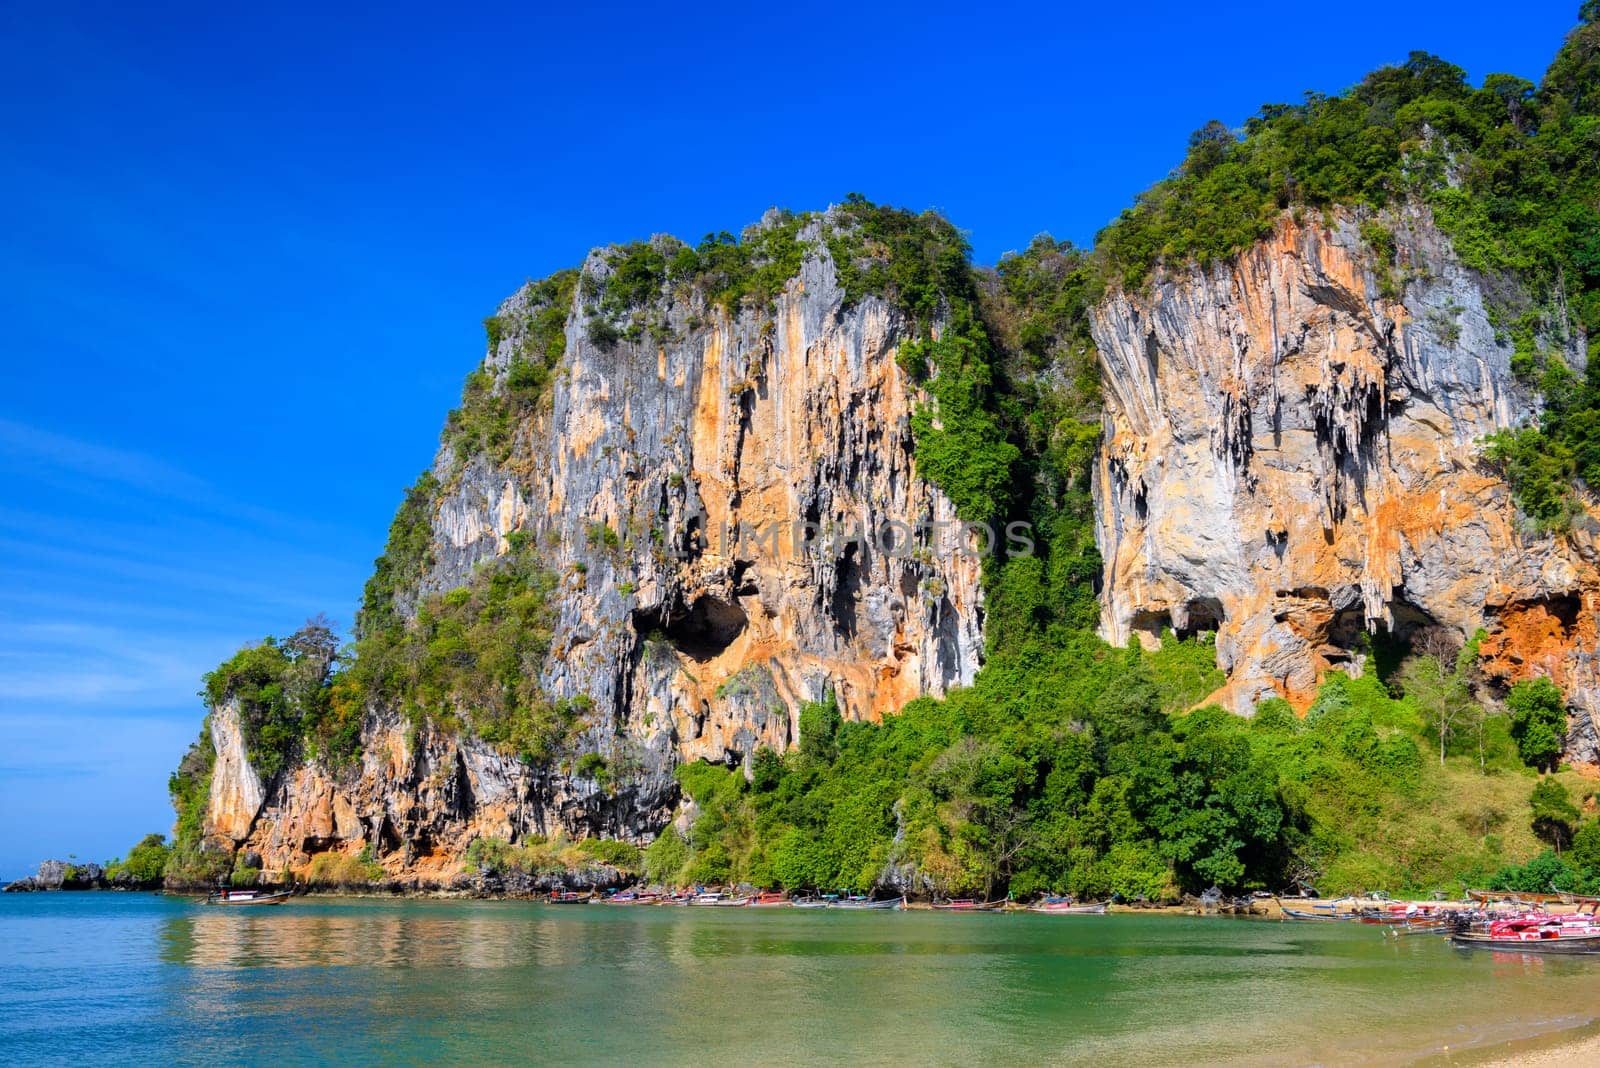 Long tail boats along cliff rocks near the beach, Tonsai Bay, Railay Beach, Ao Nang, Krabi, Thailand.